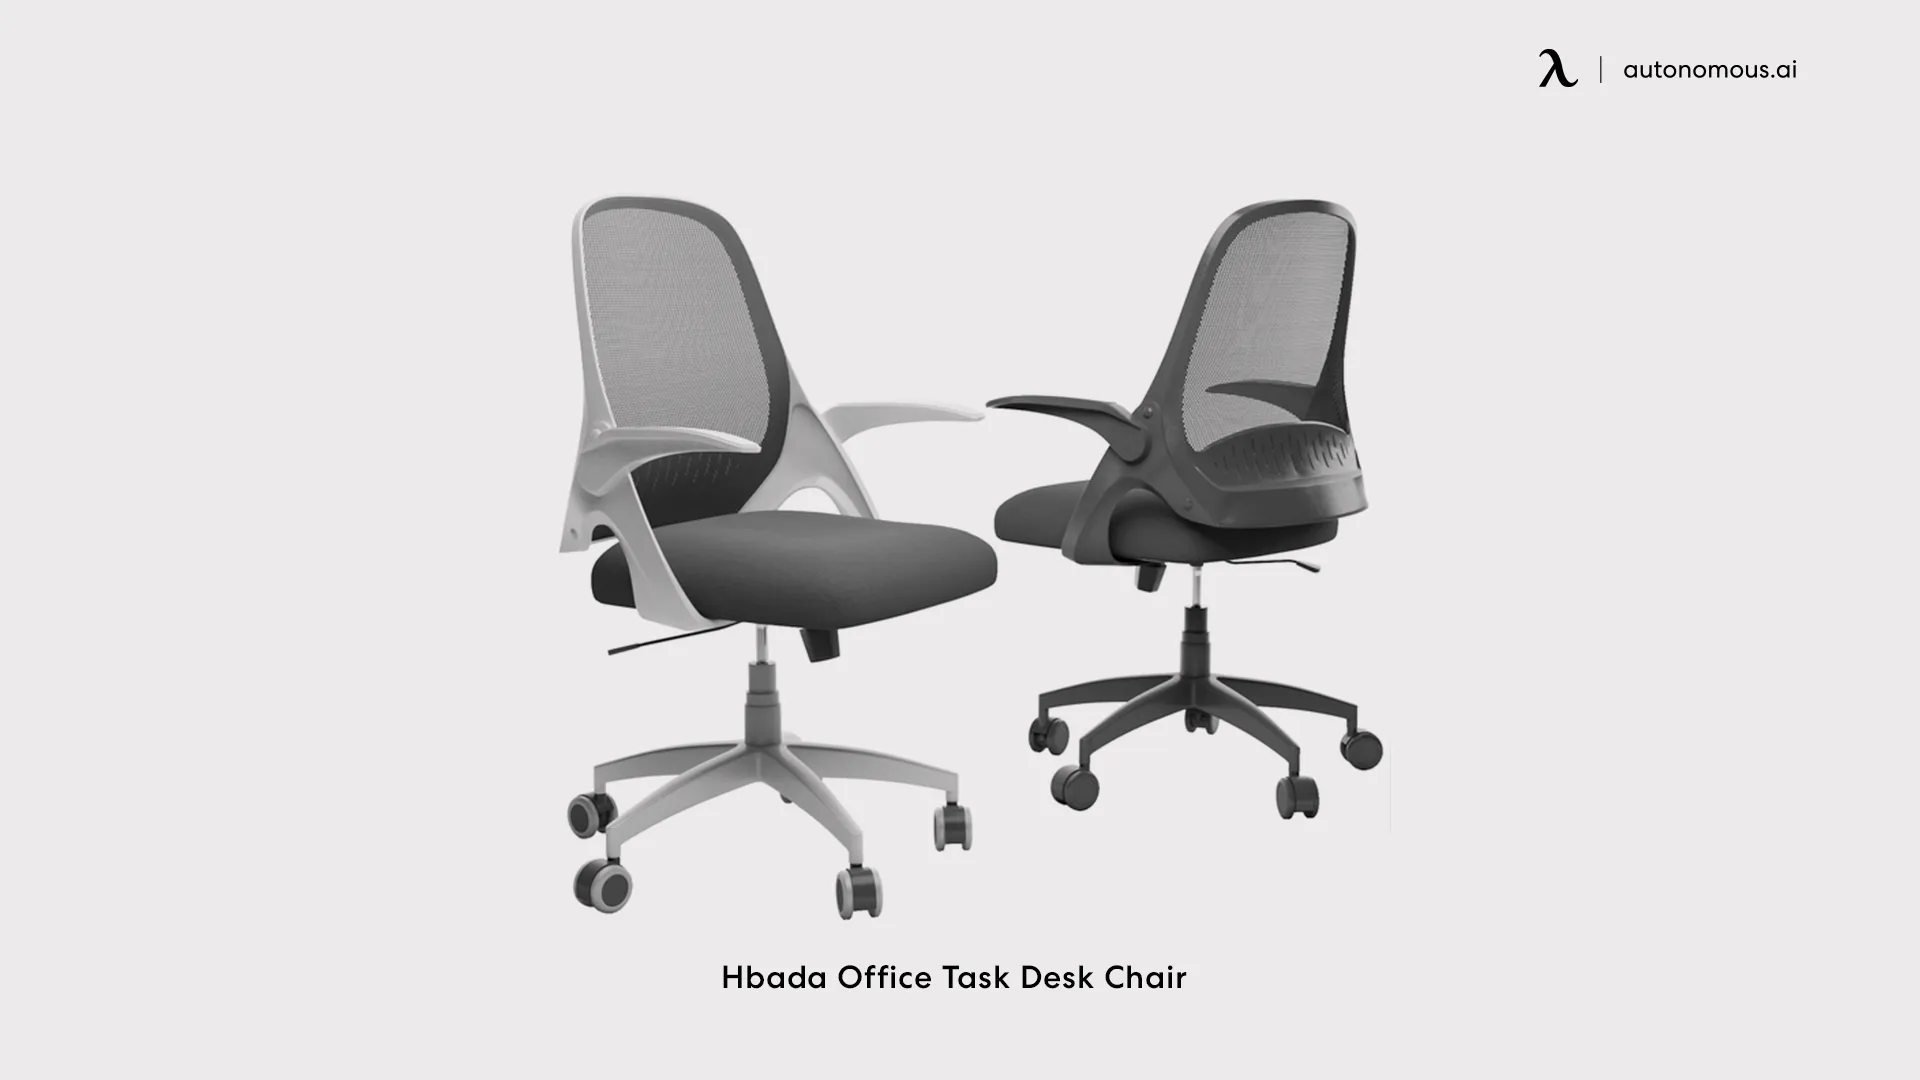 Hbada Office Task Desk Chair